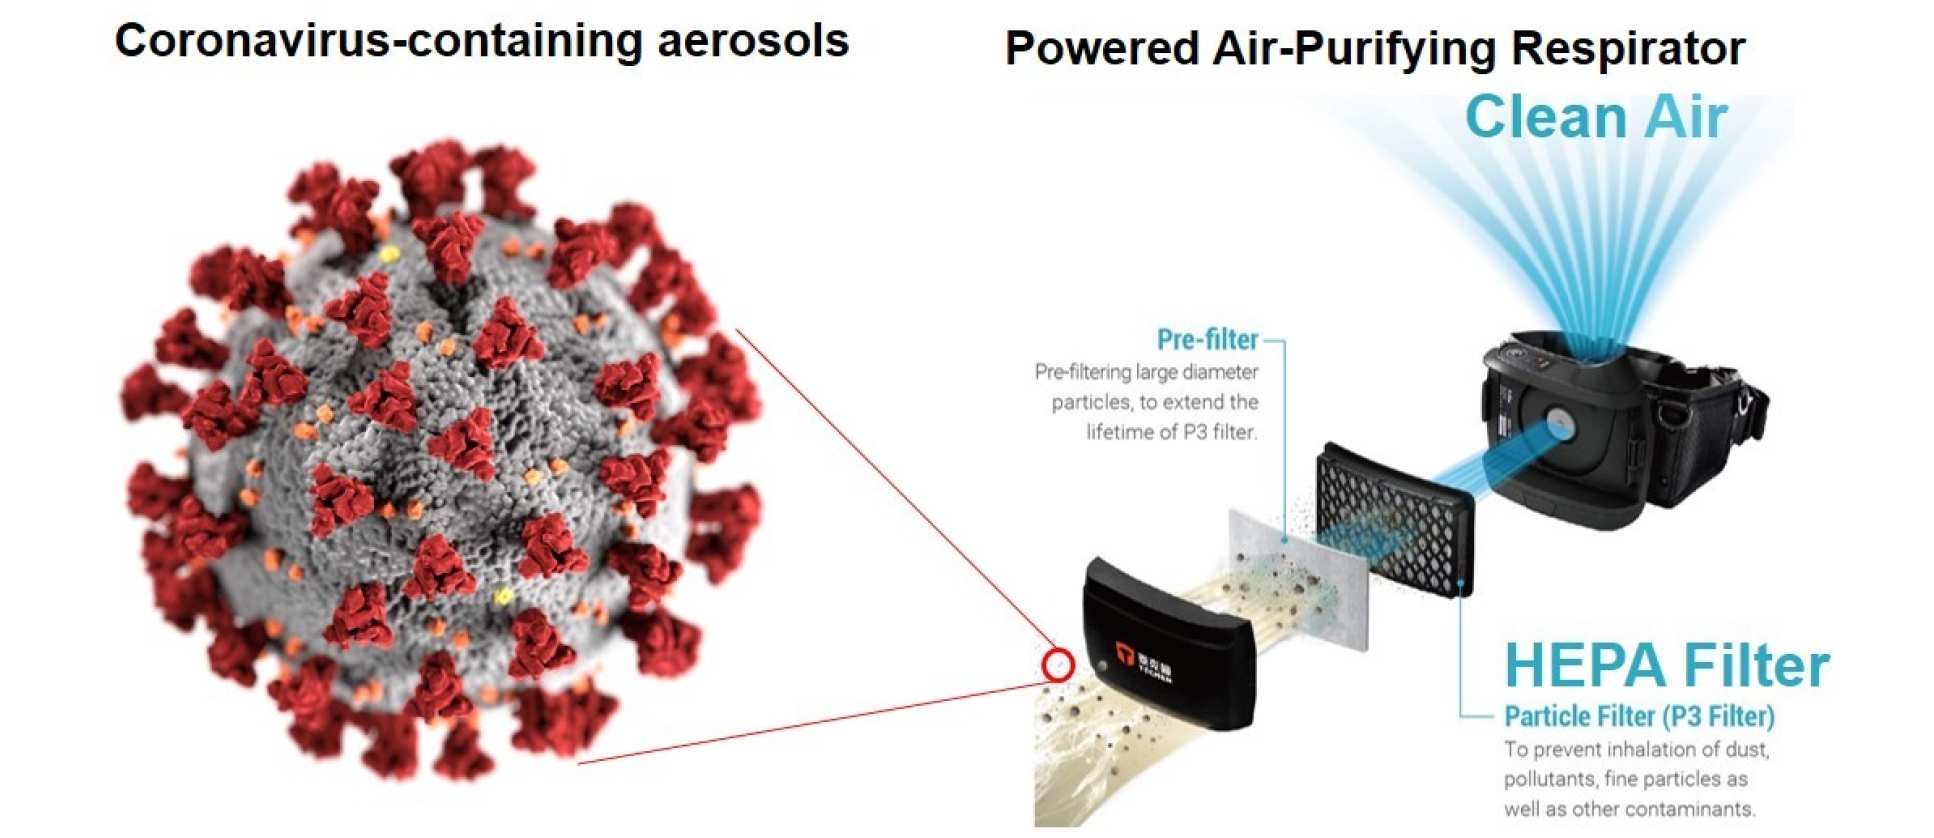 Can HEPA Air Purifiers Capture the Coronavirus?